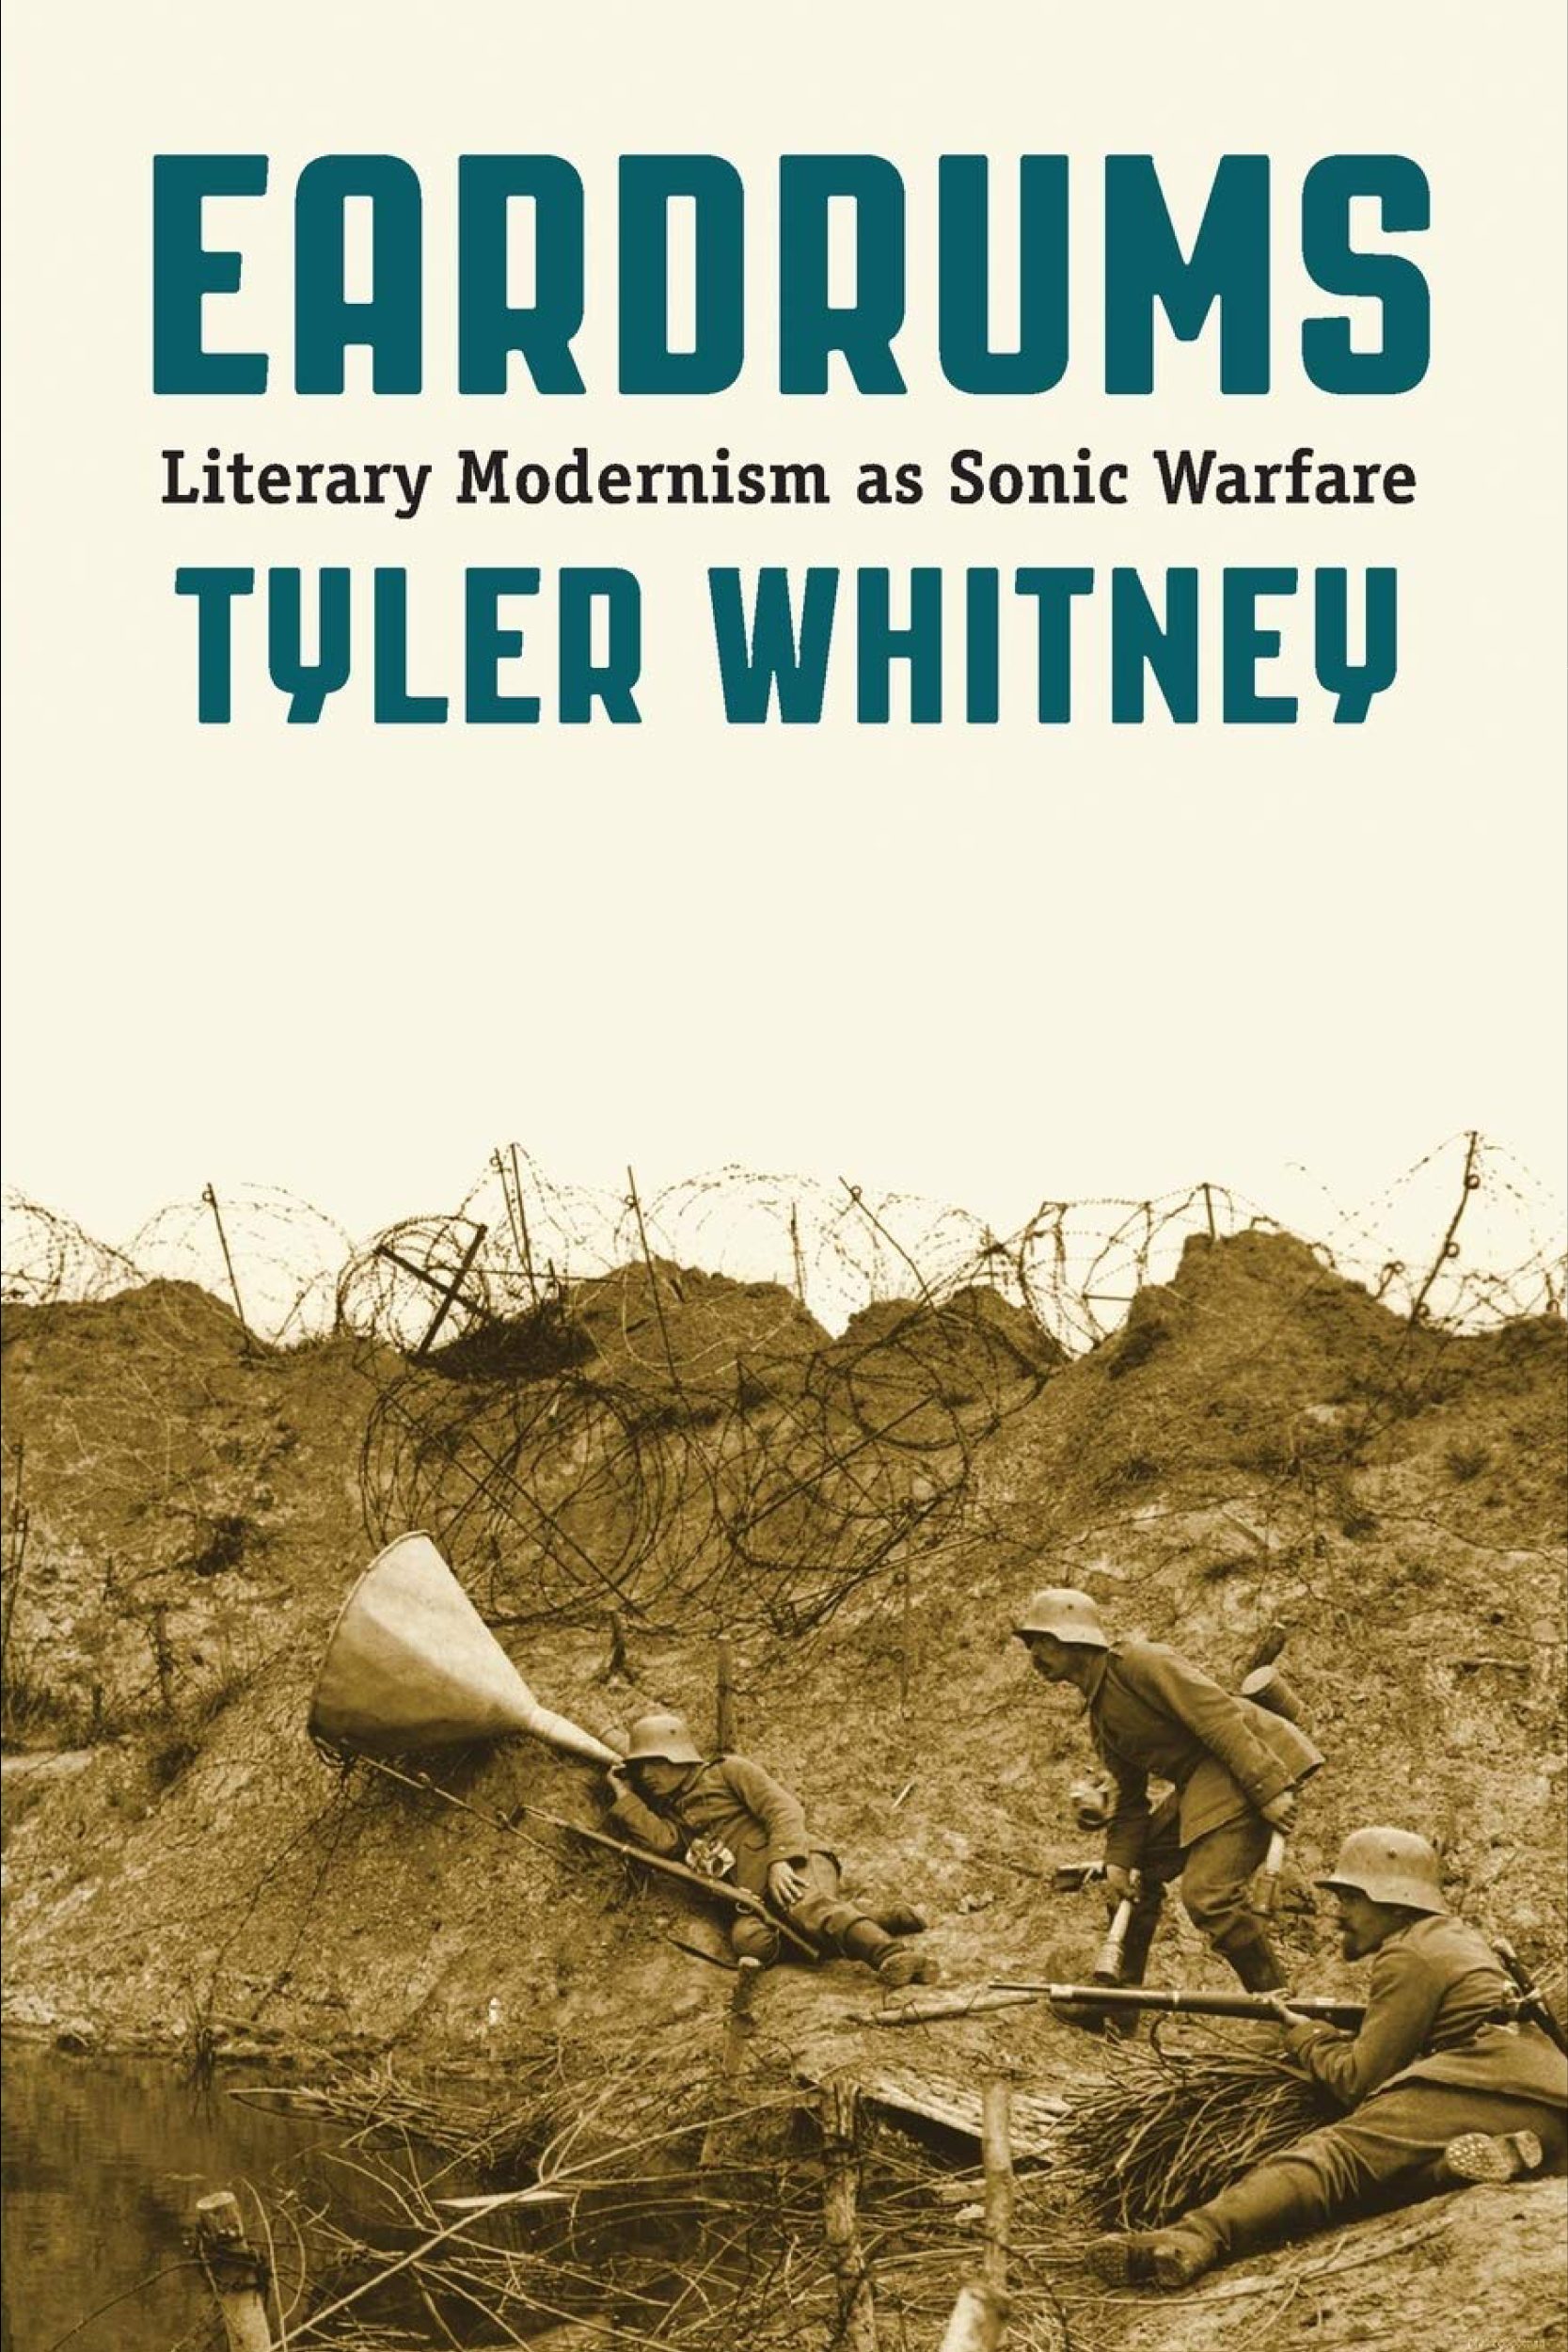 Tyler Whitney (University of Michigan). Eardrums: Literary Modernism as Sonic Warfare (Northwestern University Press).